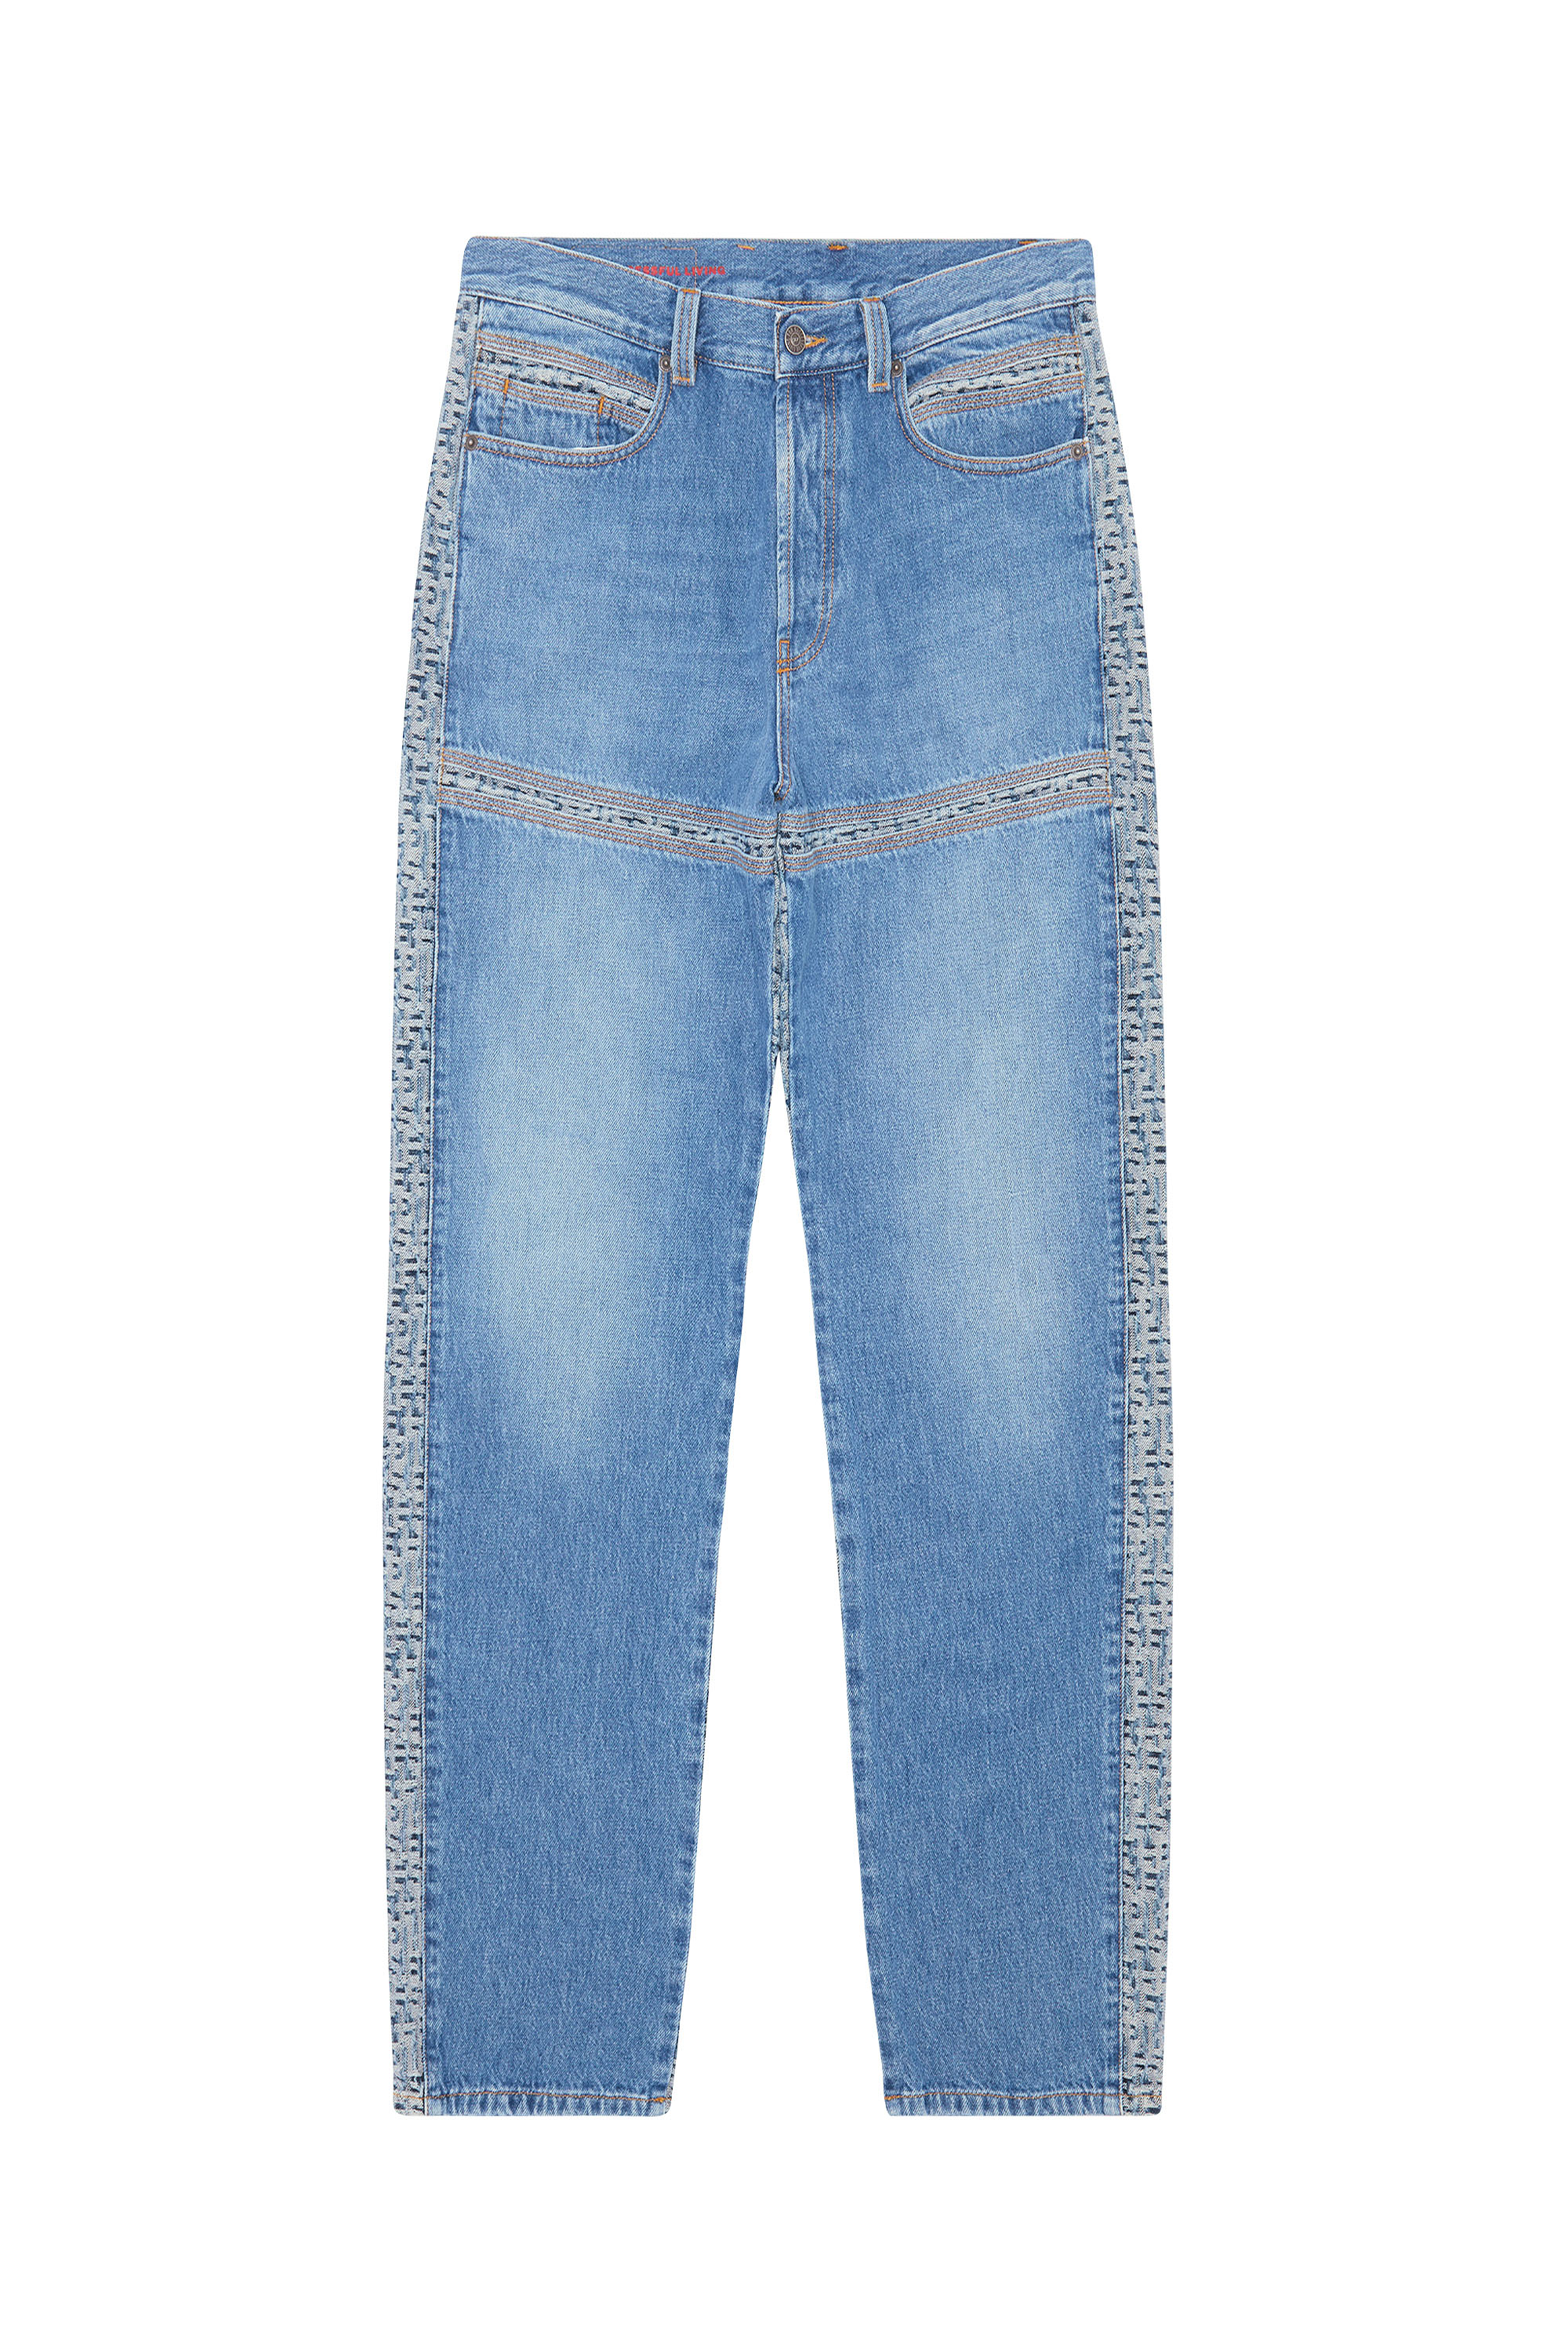 D-Mand 09E41 Straight Jeans, Medium blue - Jeans